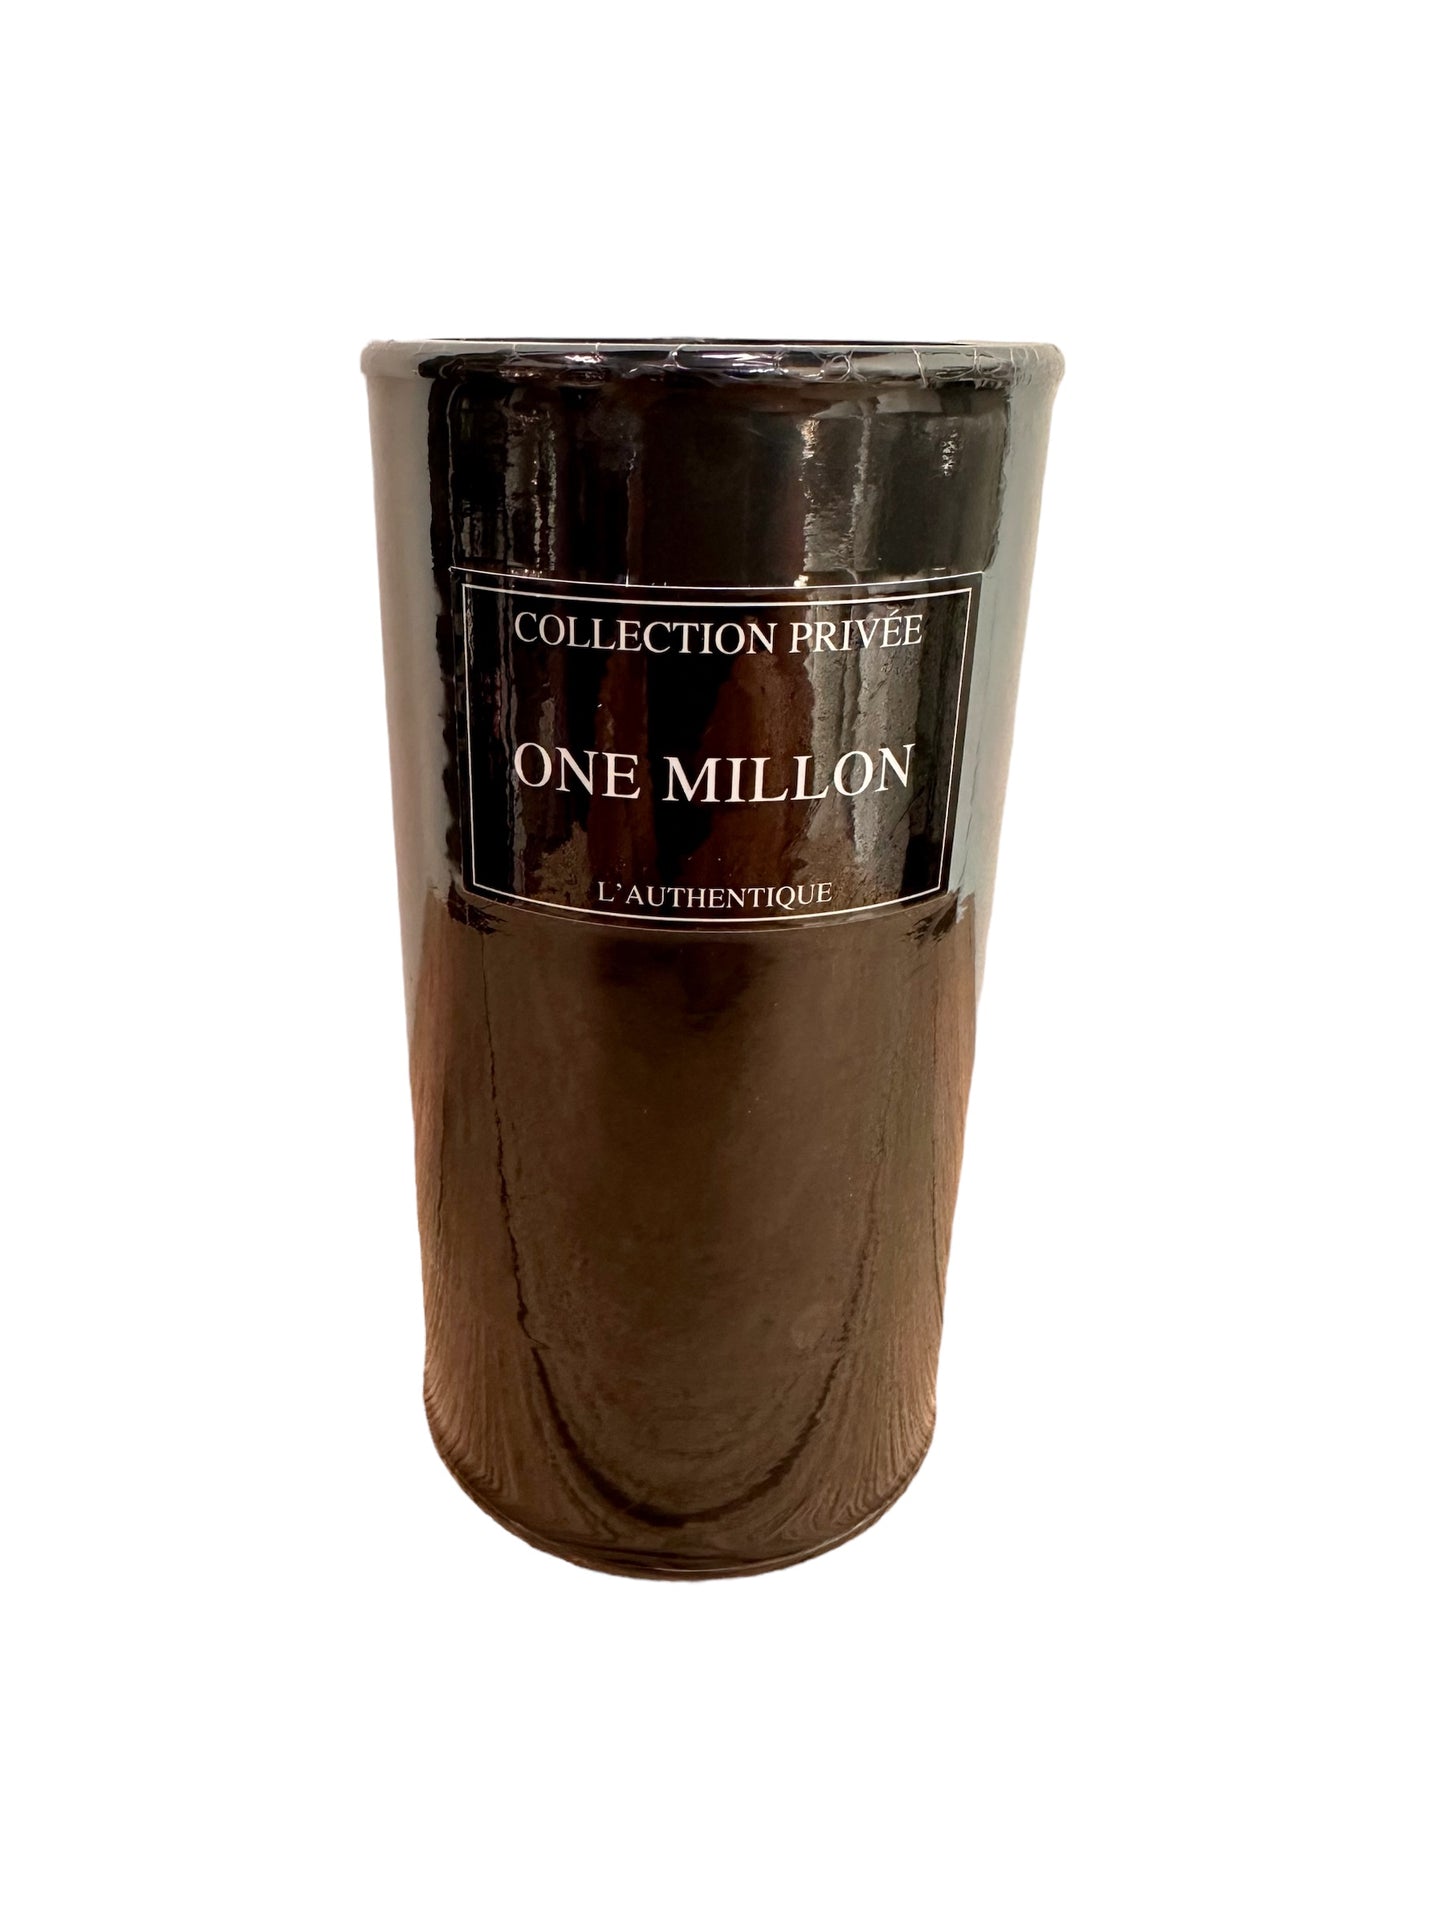 One Million - Collection Privée